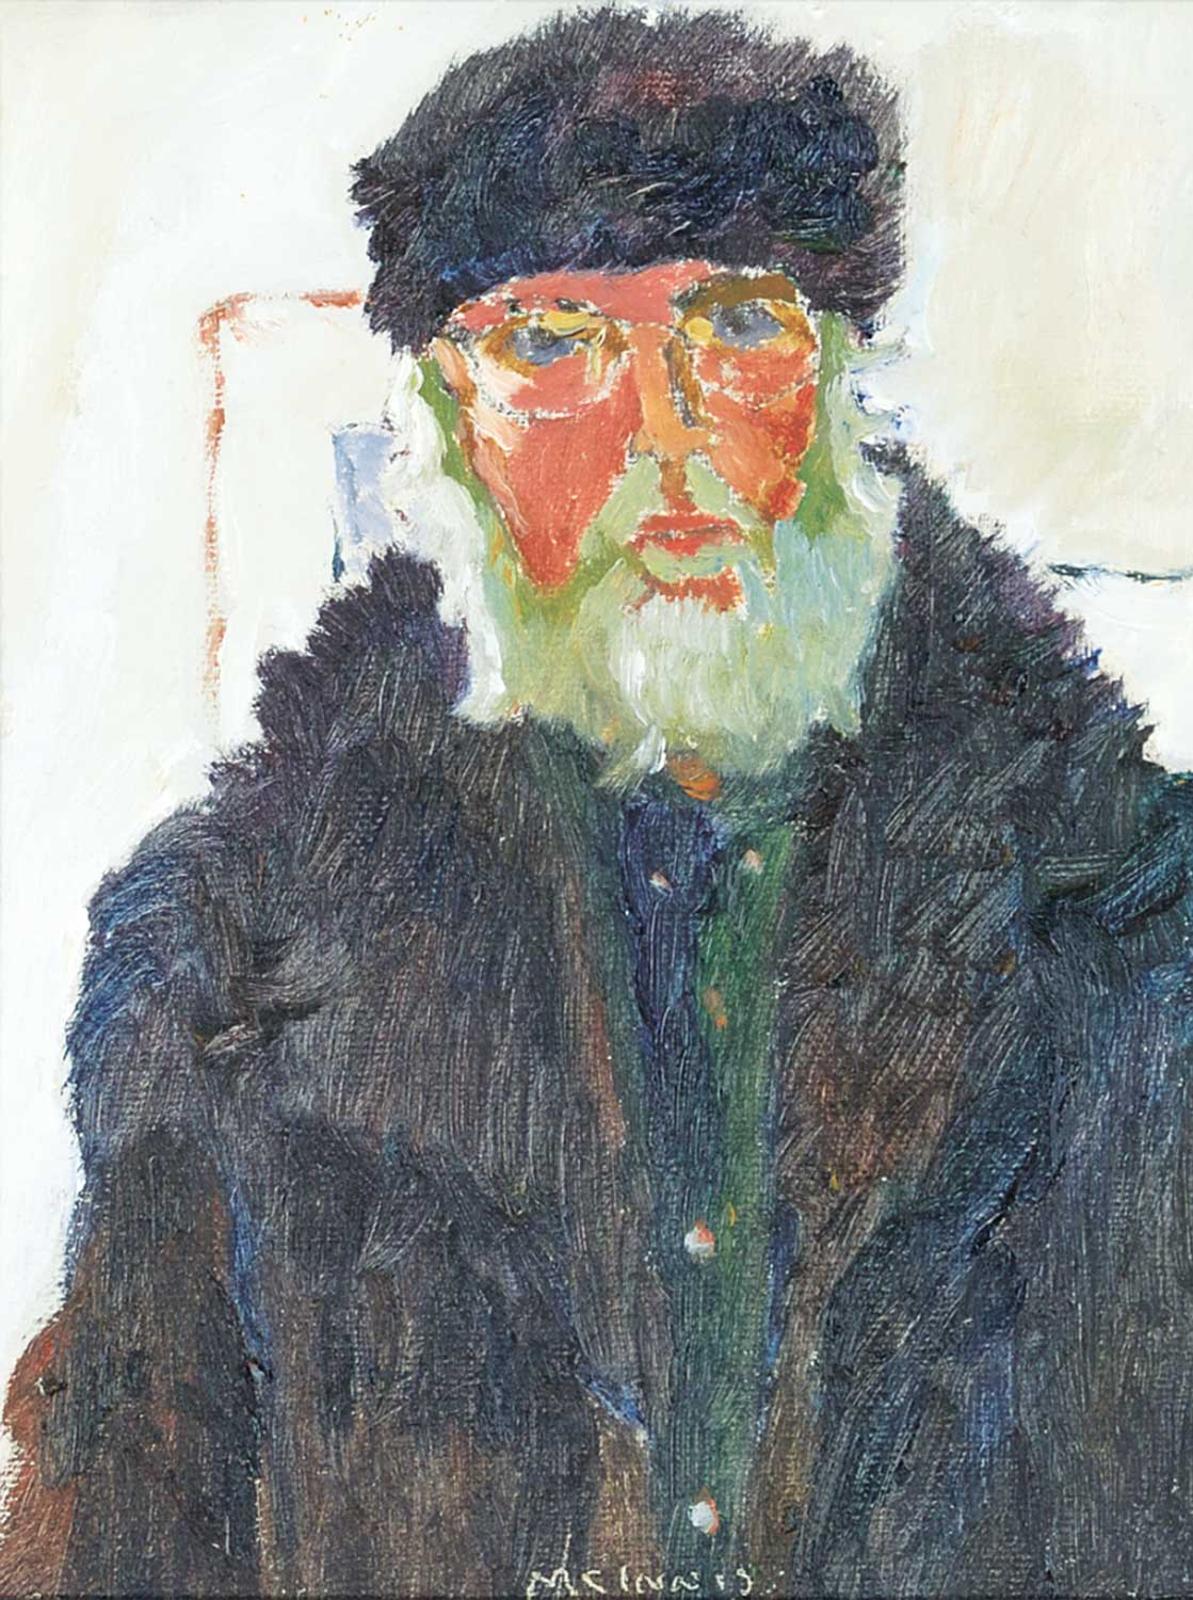 Robert F.M. McInnis (1942) - Untitled - Portrait of a Bearded Man